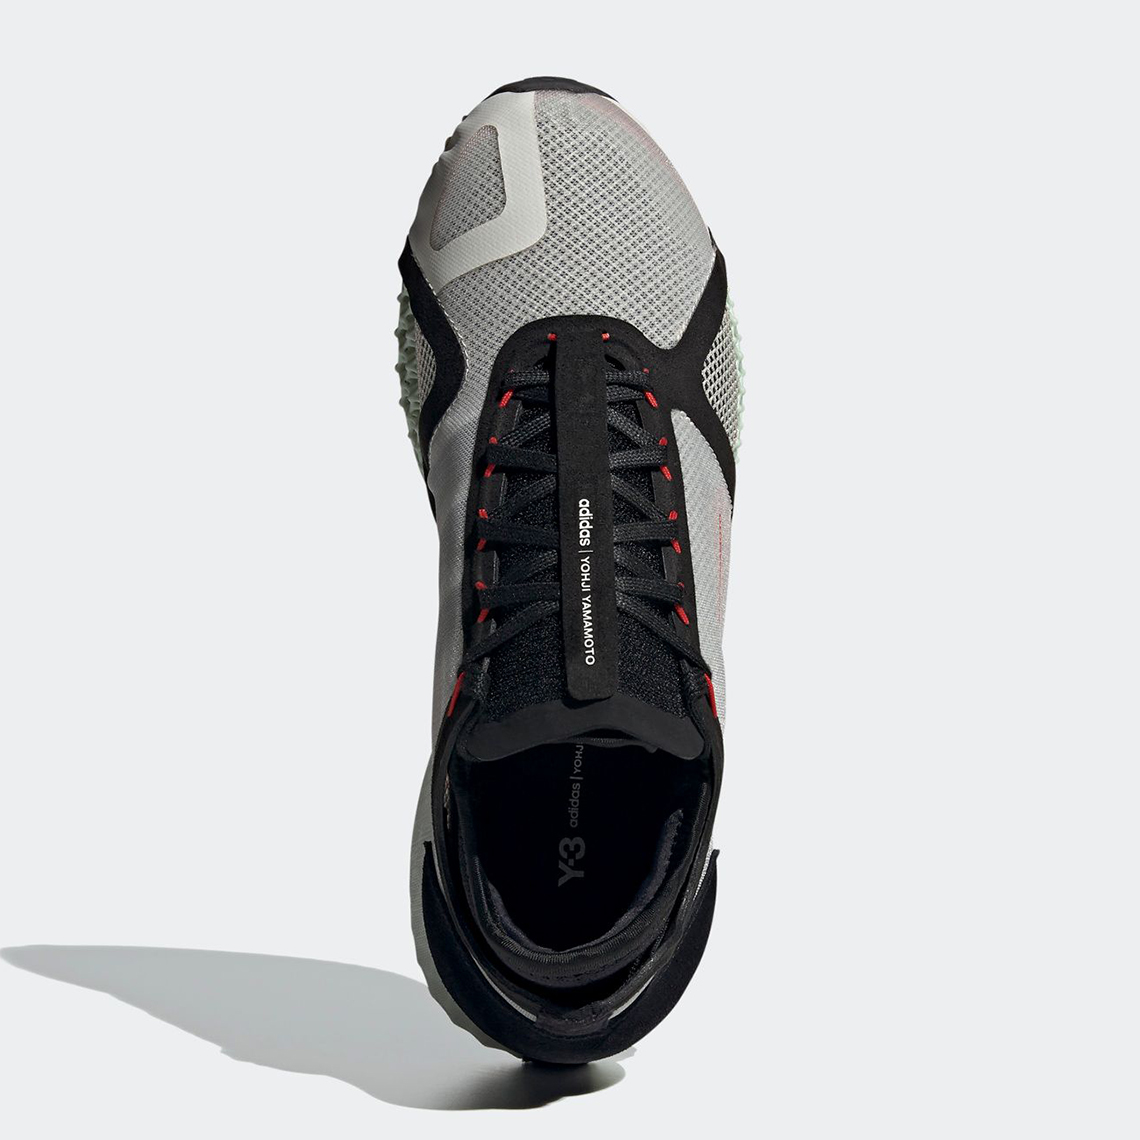 Adidas Y3 Runner 4d Io Fz4501 2